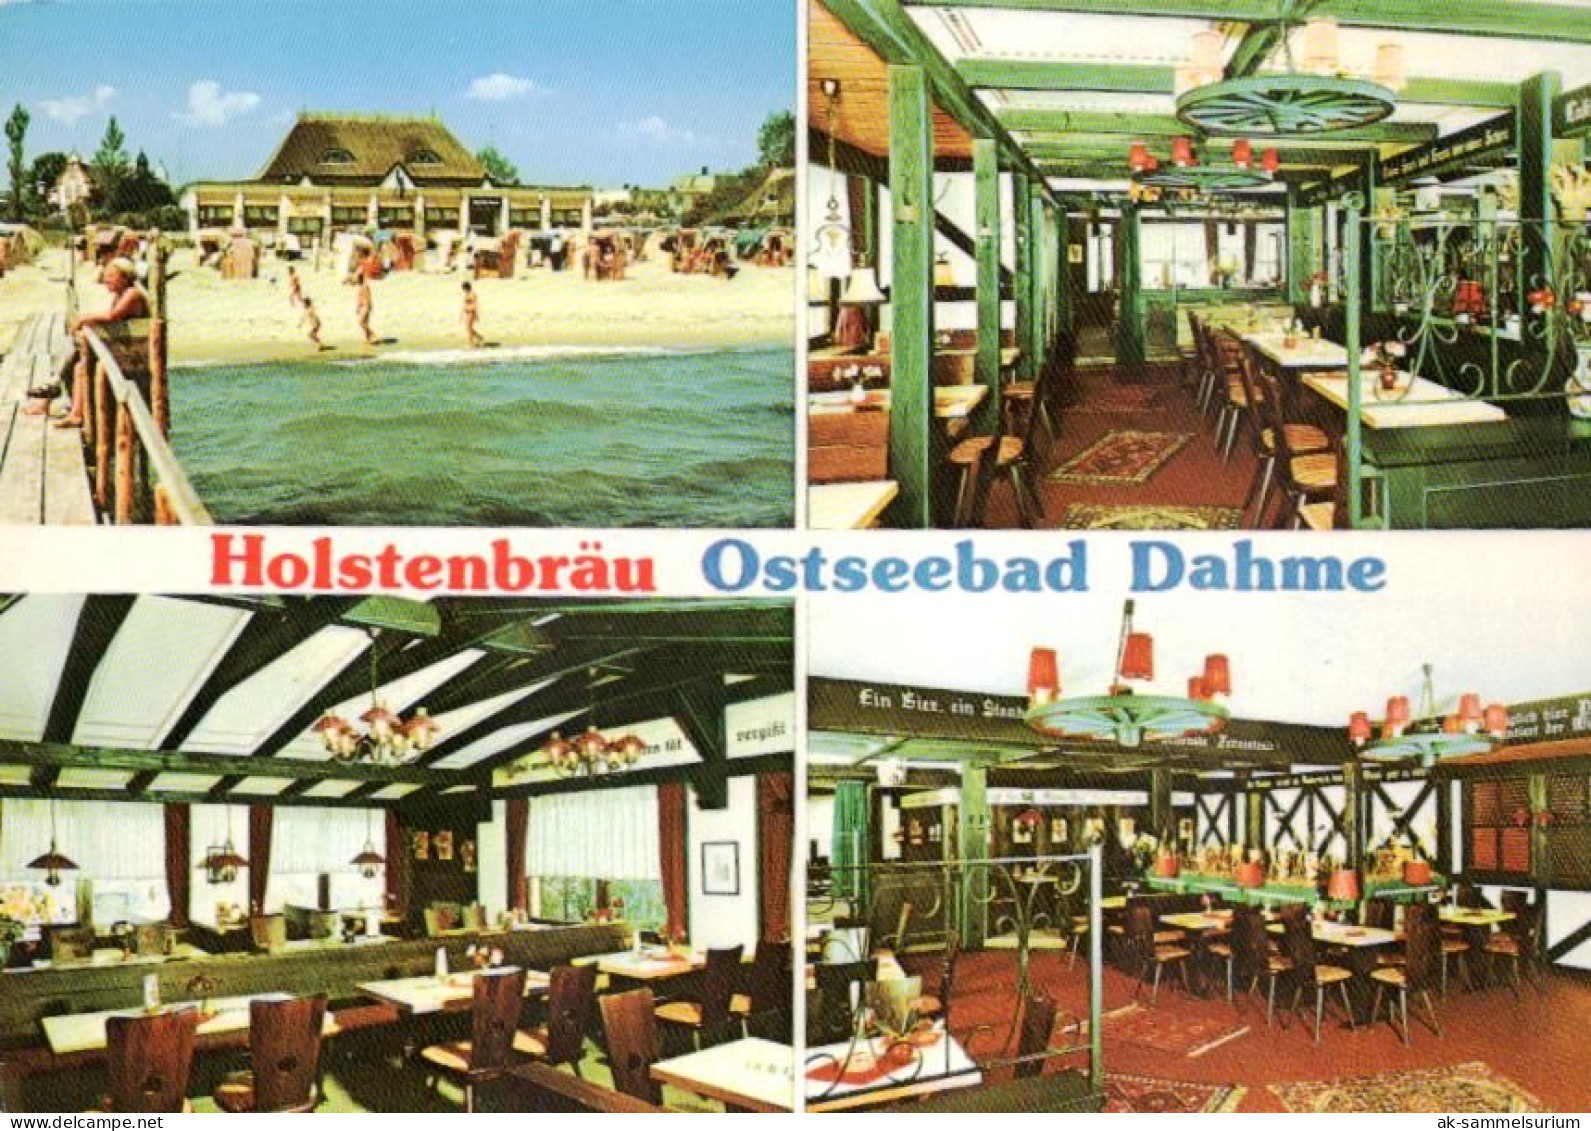 Dahme (Holstein) / "Goldener Anker" Restaurant (D-A417) - Dahme